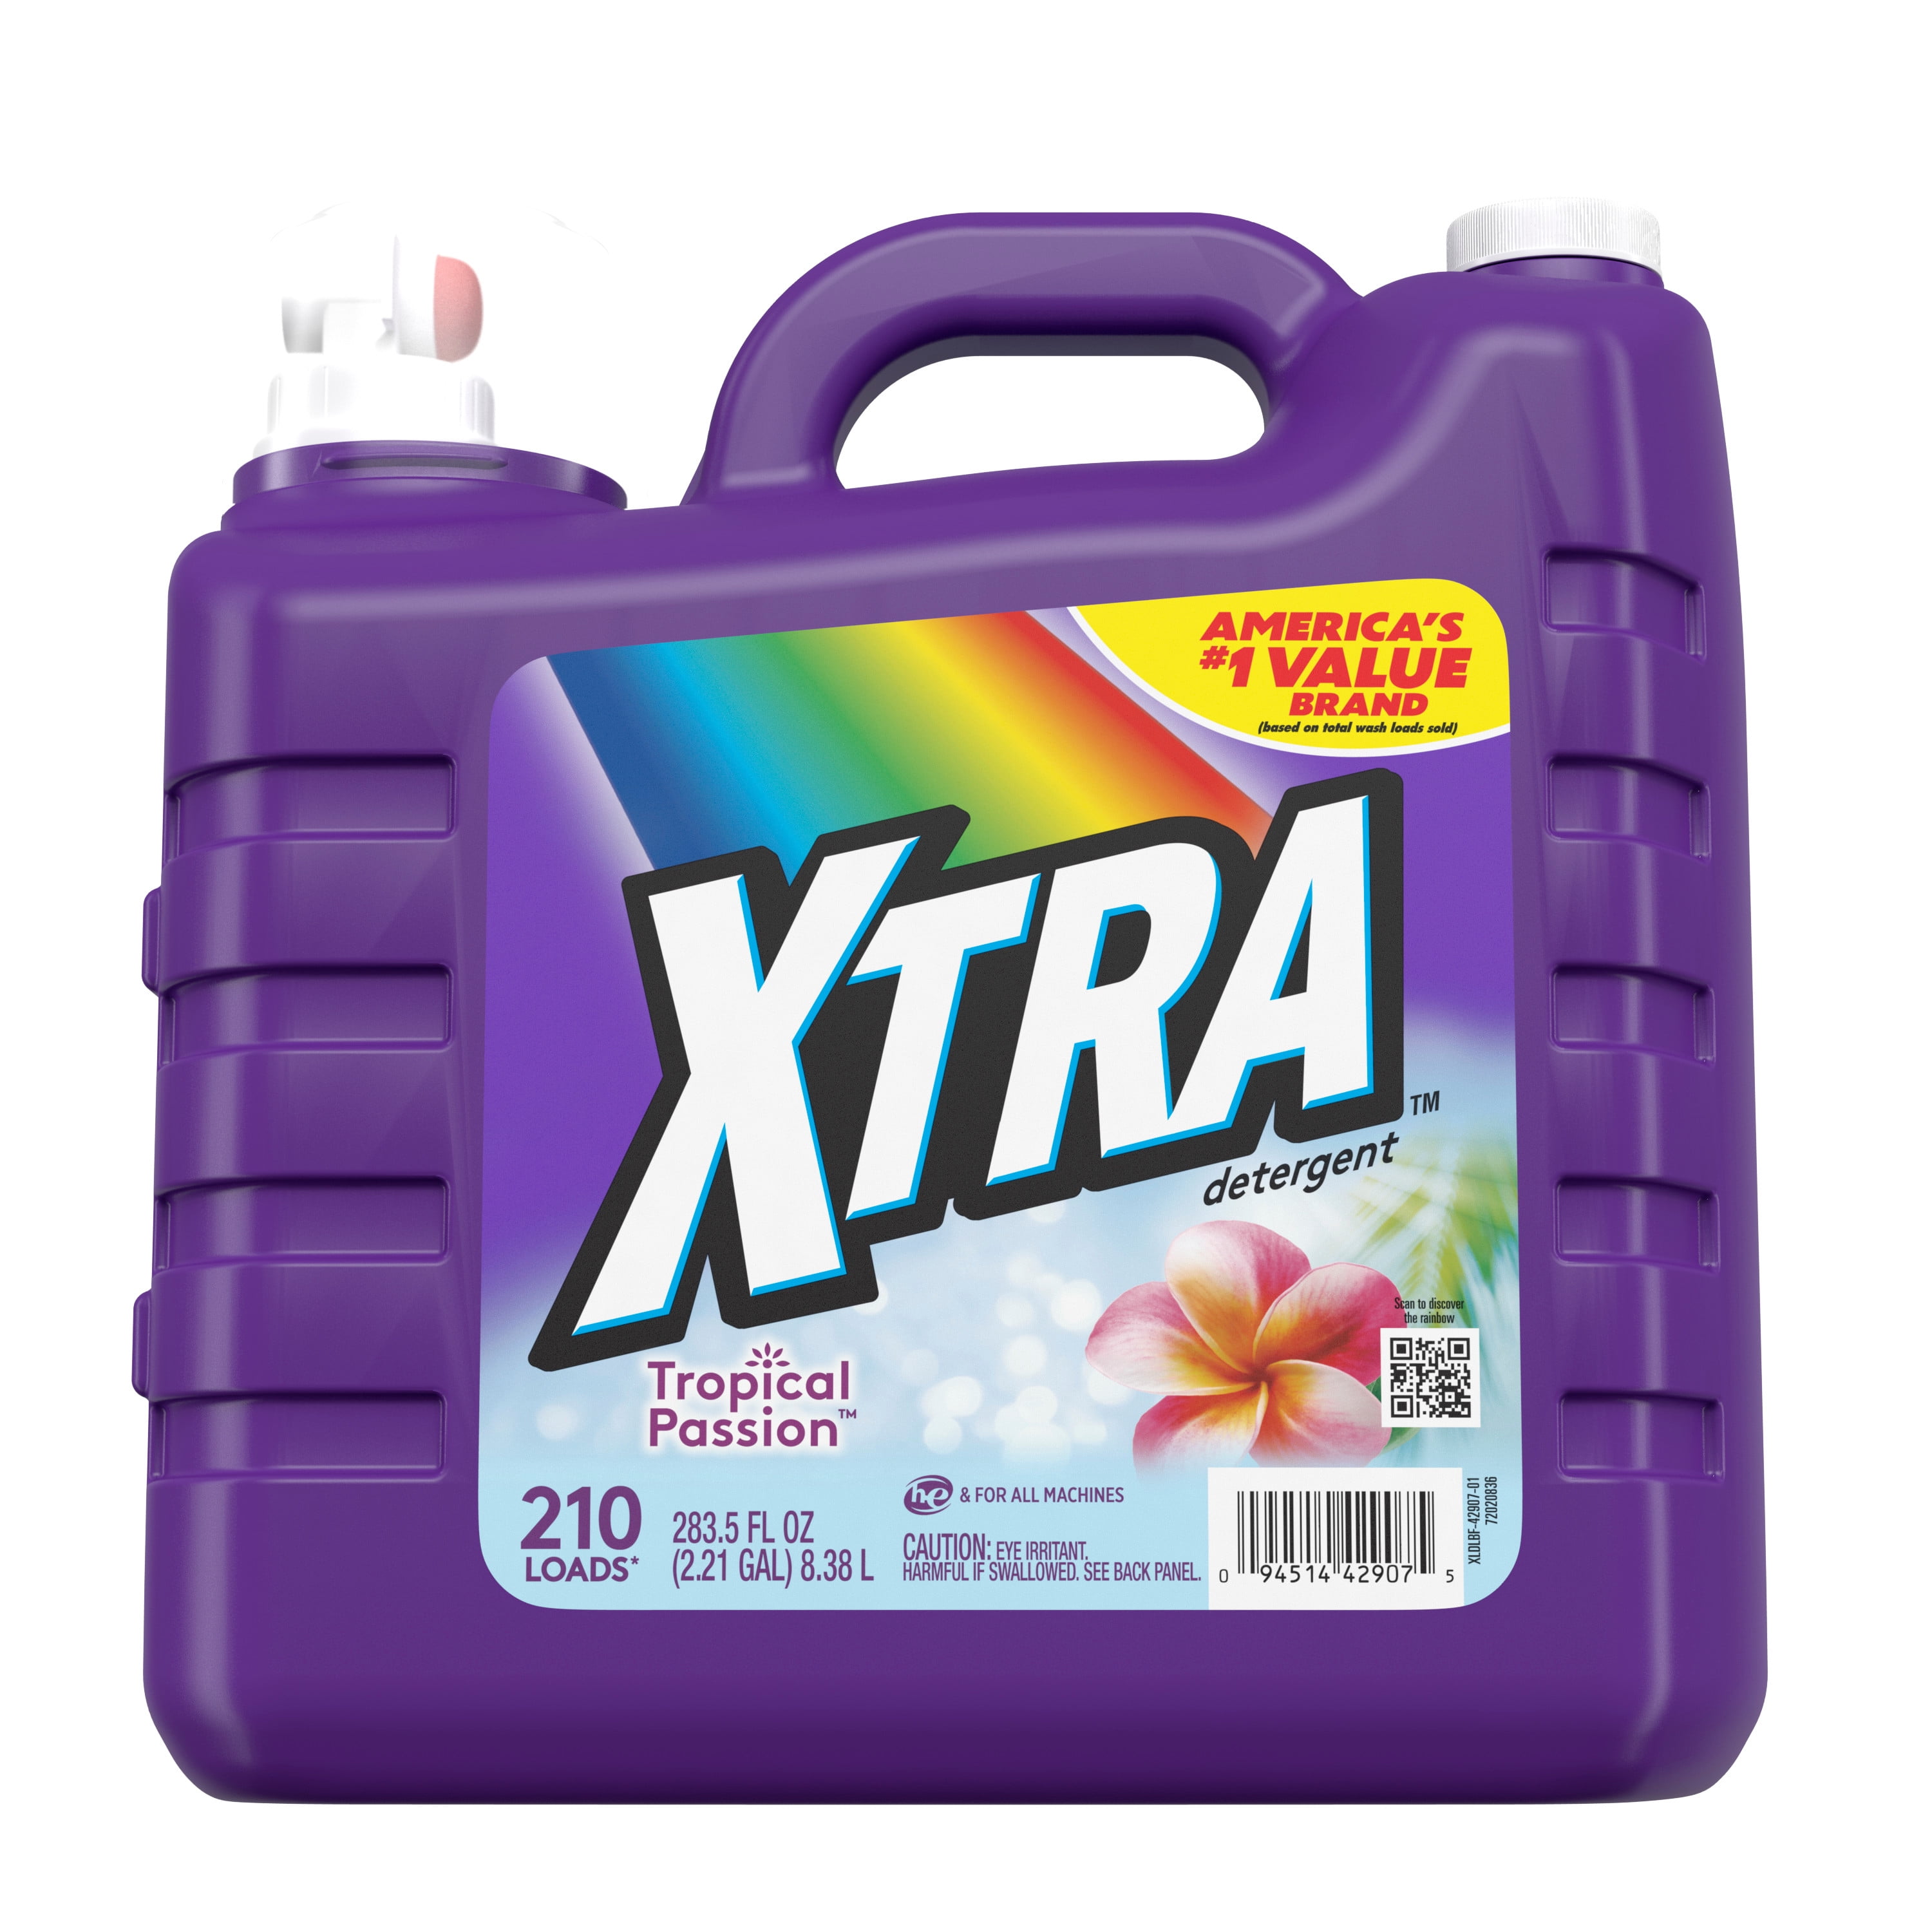 XTRA Tropical Passion, 210 Loads Liquid Laundry Detergent, 283.5 Fl oz